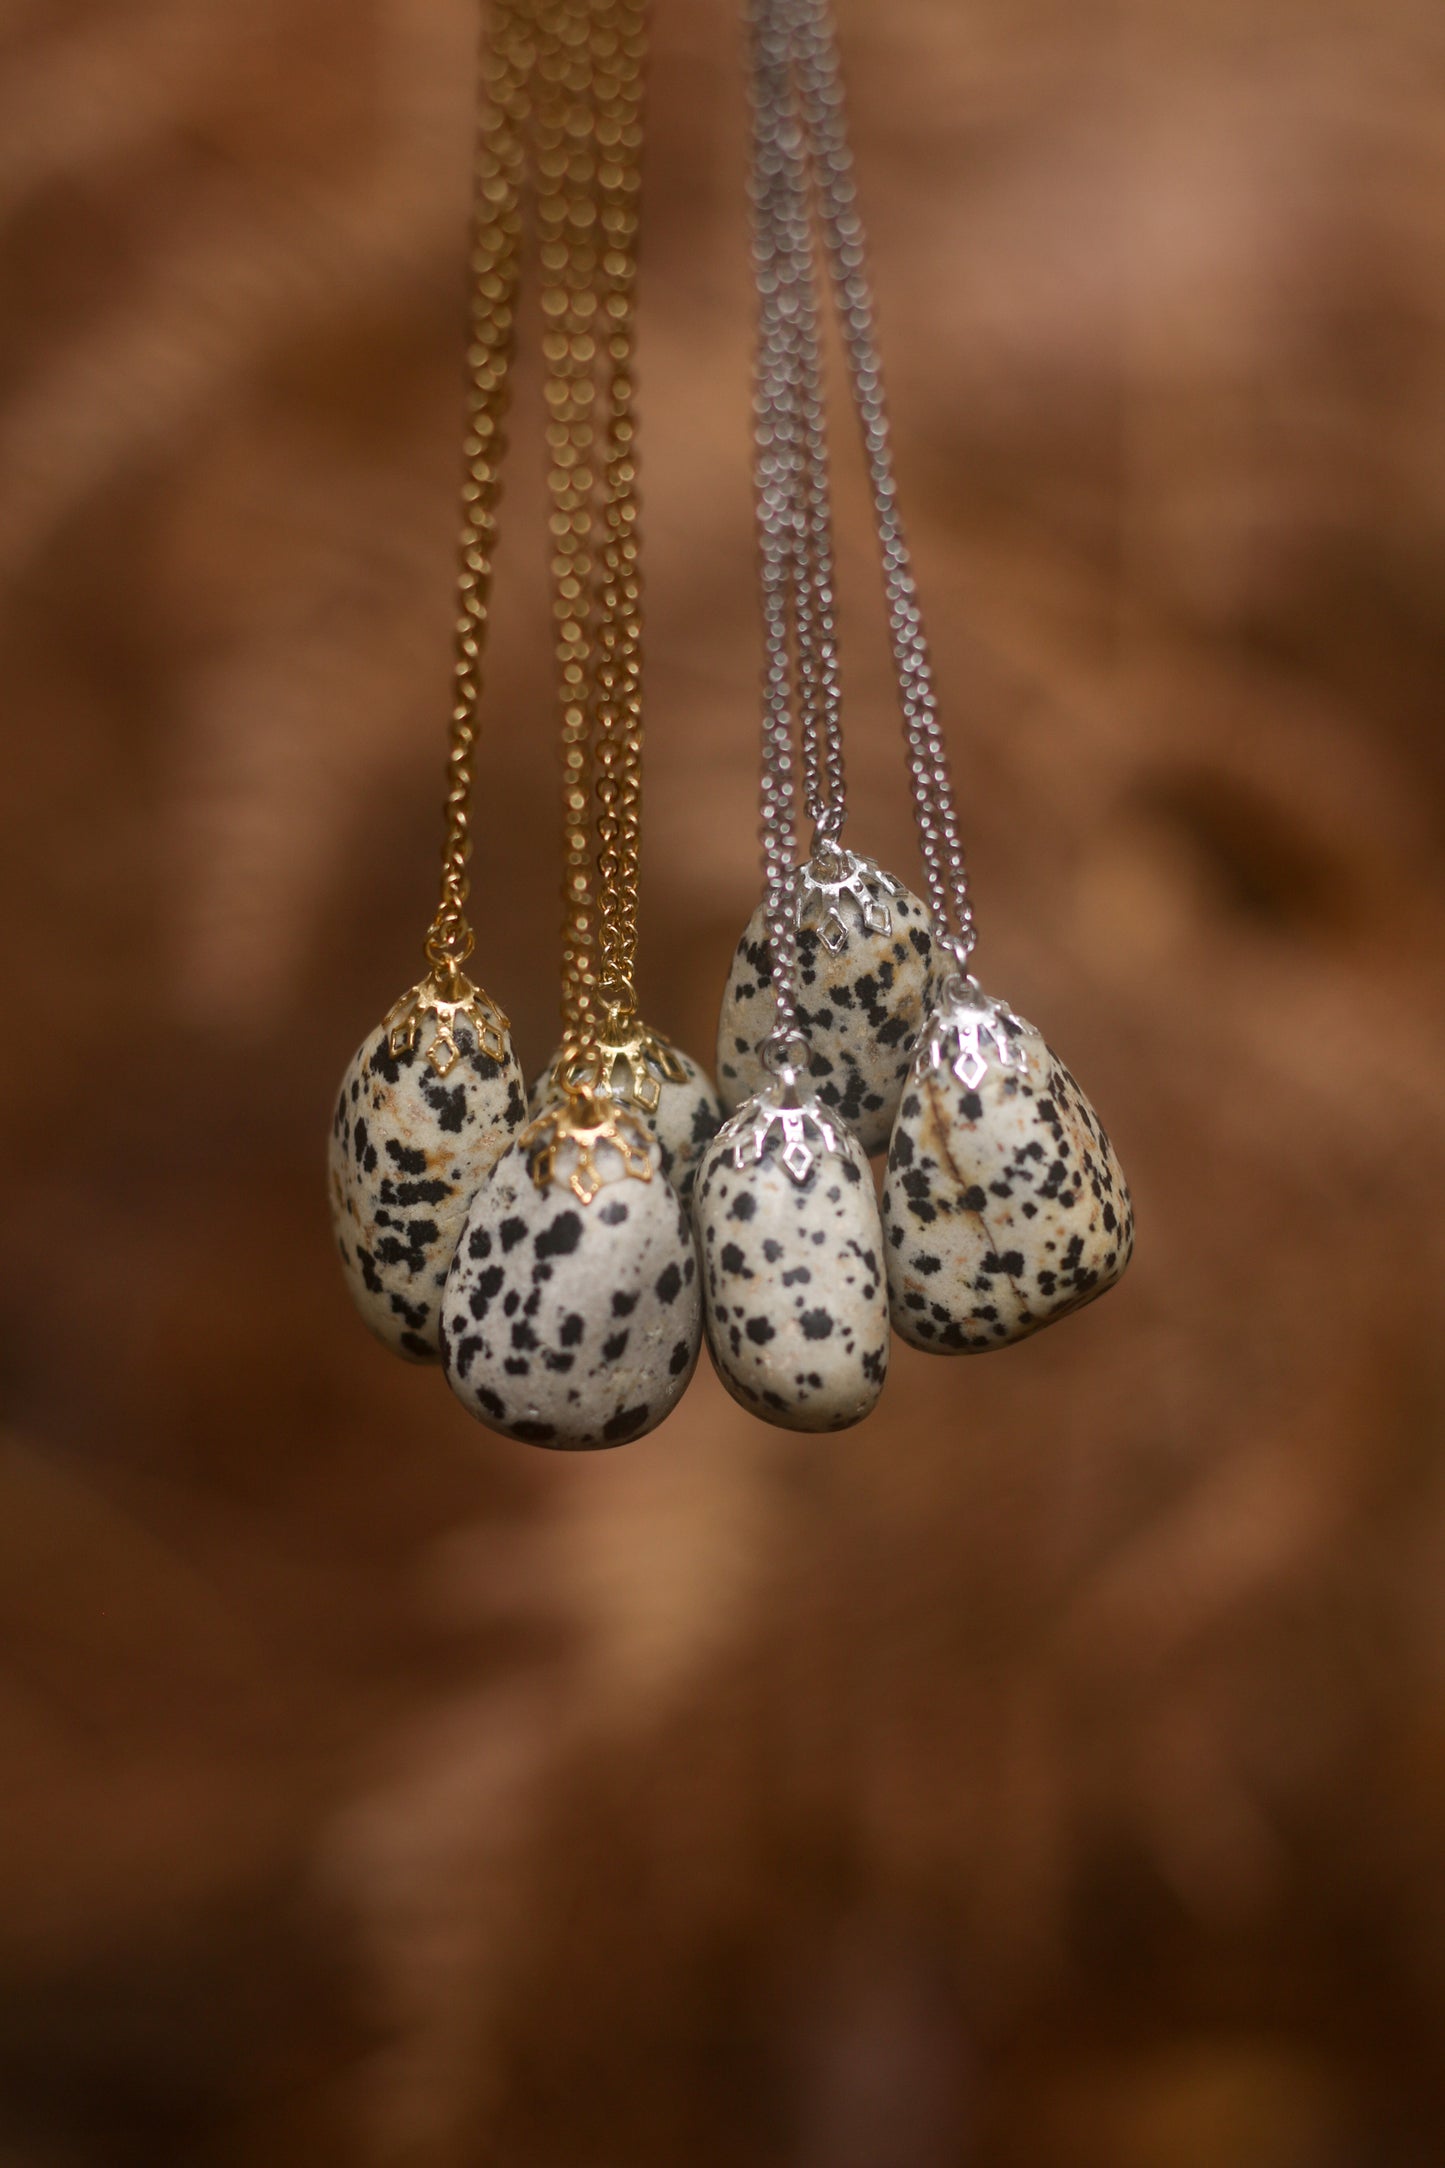 Tumbled stone necklace - Dalmatian jasper